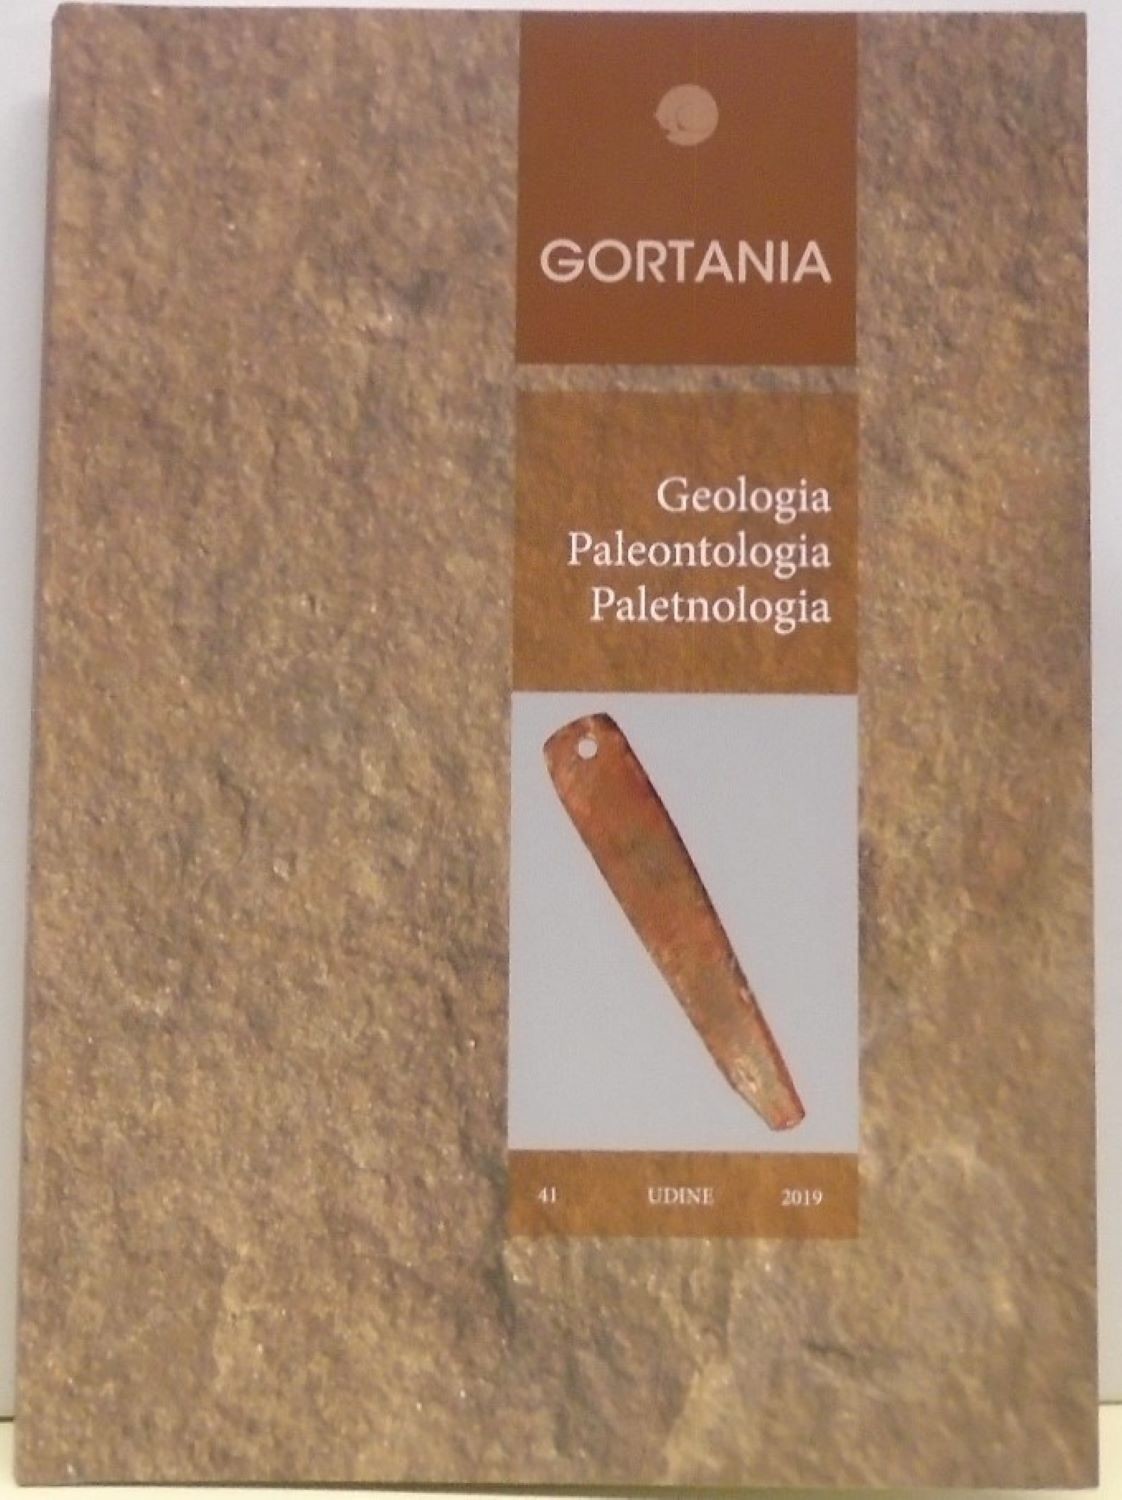 Gortania. Atti del Museo Friulano di Storia Naturale. Geologia, Paleontologia, Paletnologia 2019/41. (Rippl-Rónai Múzeum CC BY-NC-ND)